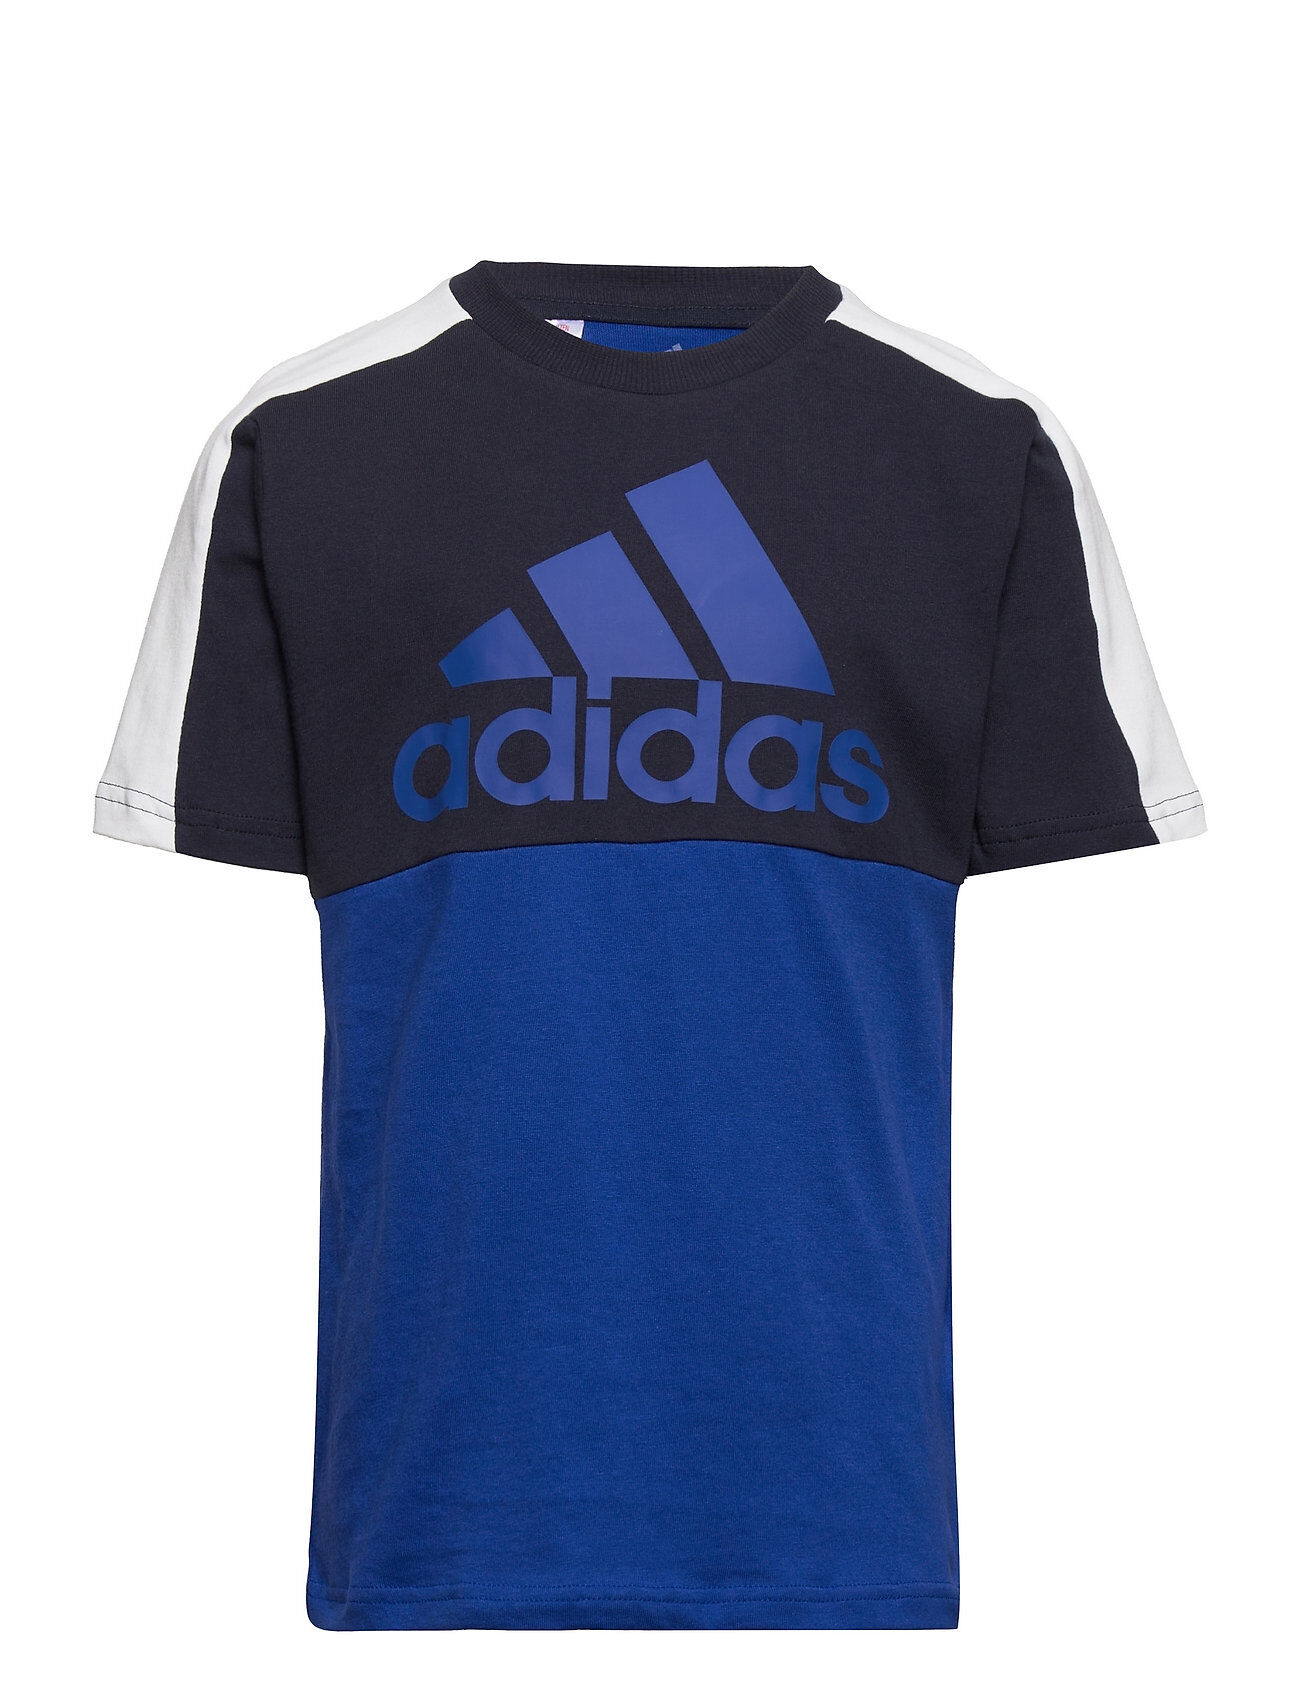 adidas Performance Colorblock Tee T-shirts Short-sleeved Blå Adidas Performance